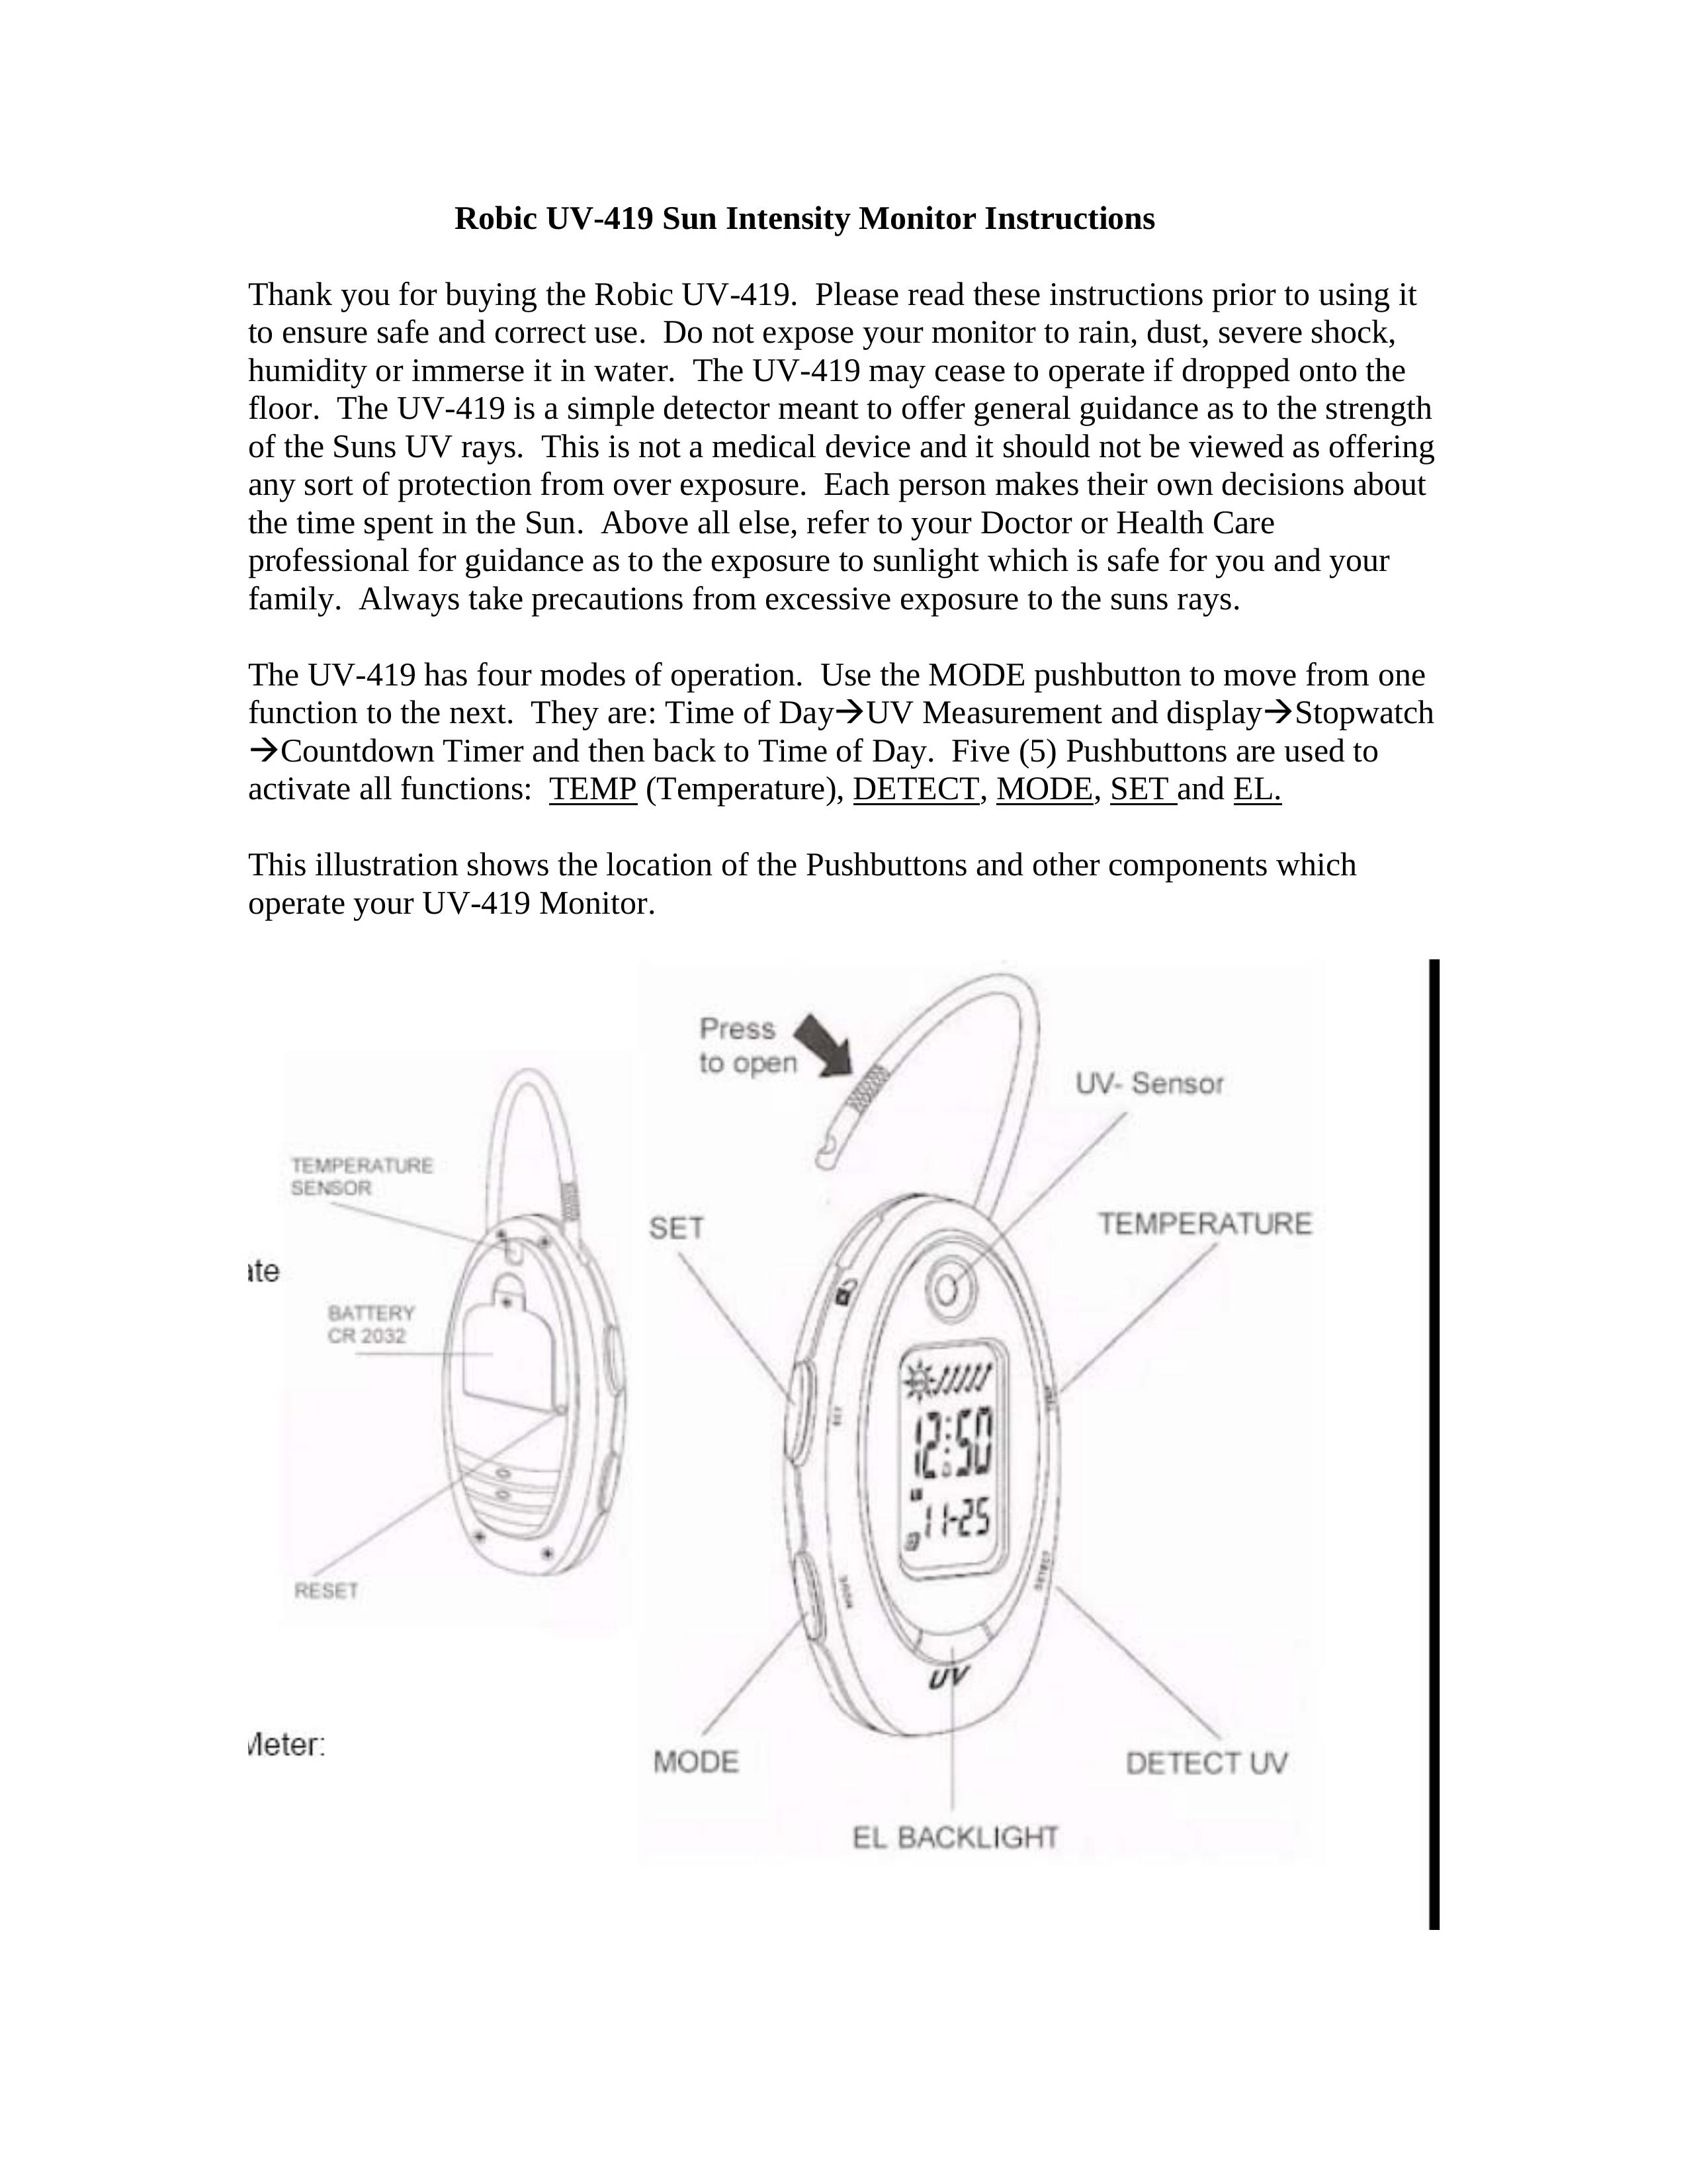 Robic UV-419 Outdoor Timer User Manual